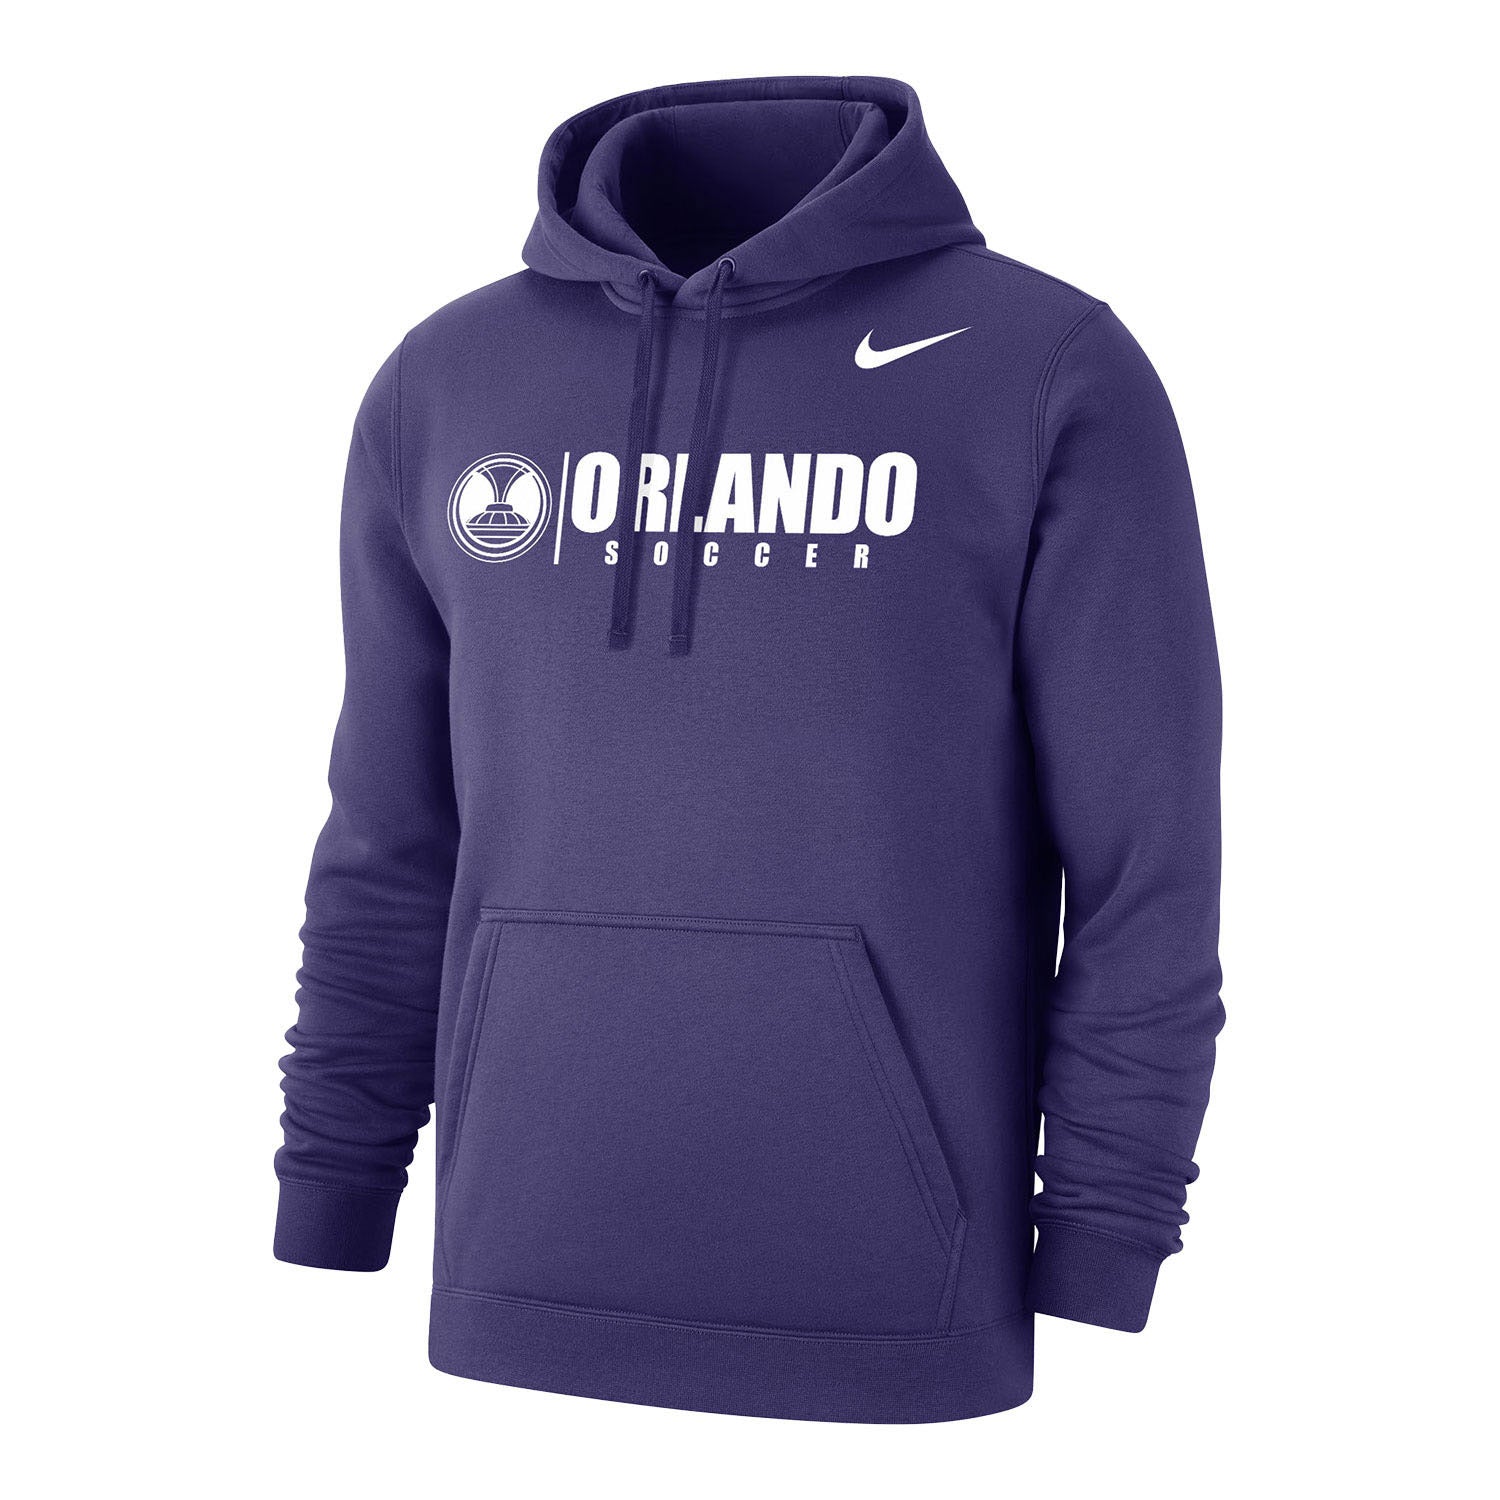 Unisex Nike Combo Purple Hoodie | NWSL